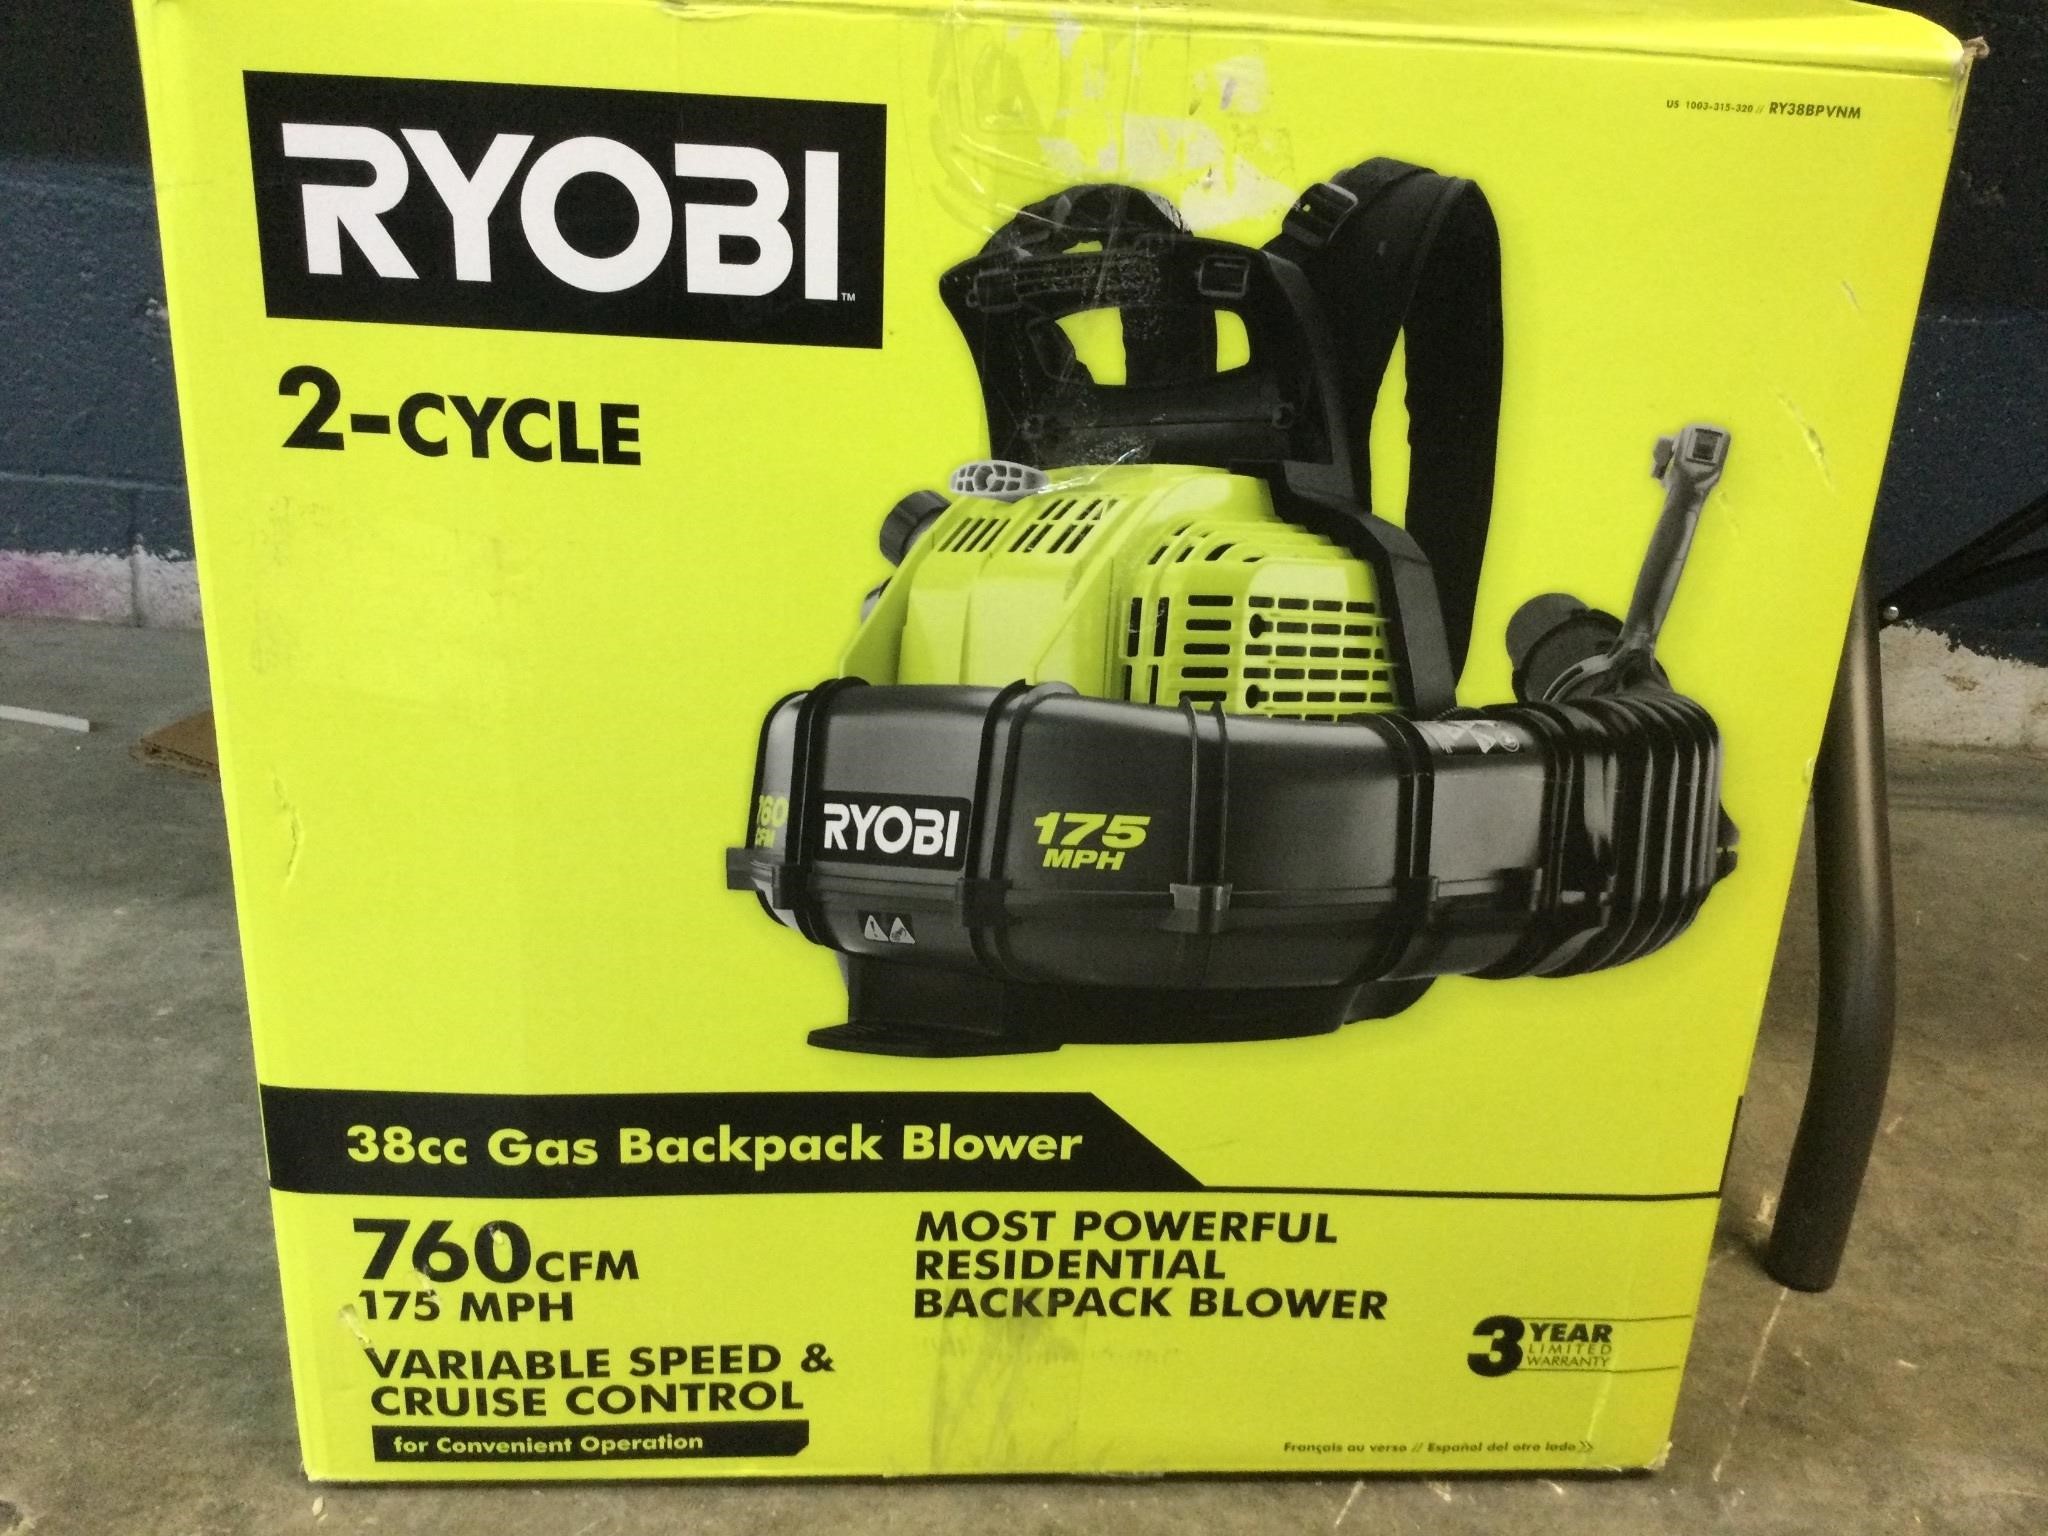 Ryobi 2-cycle 38cc Gas backpack Blower